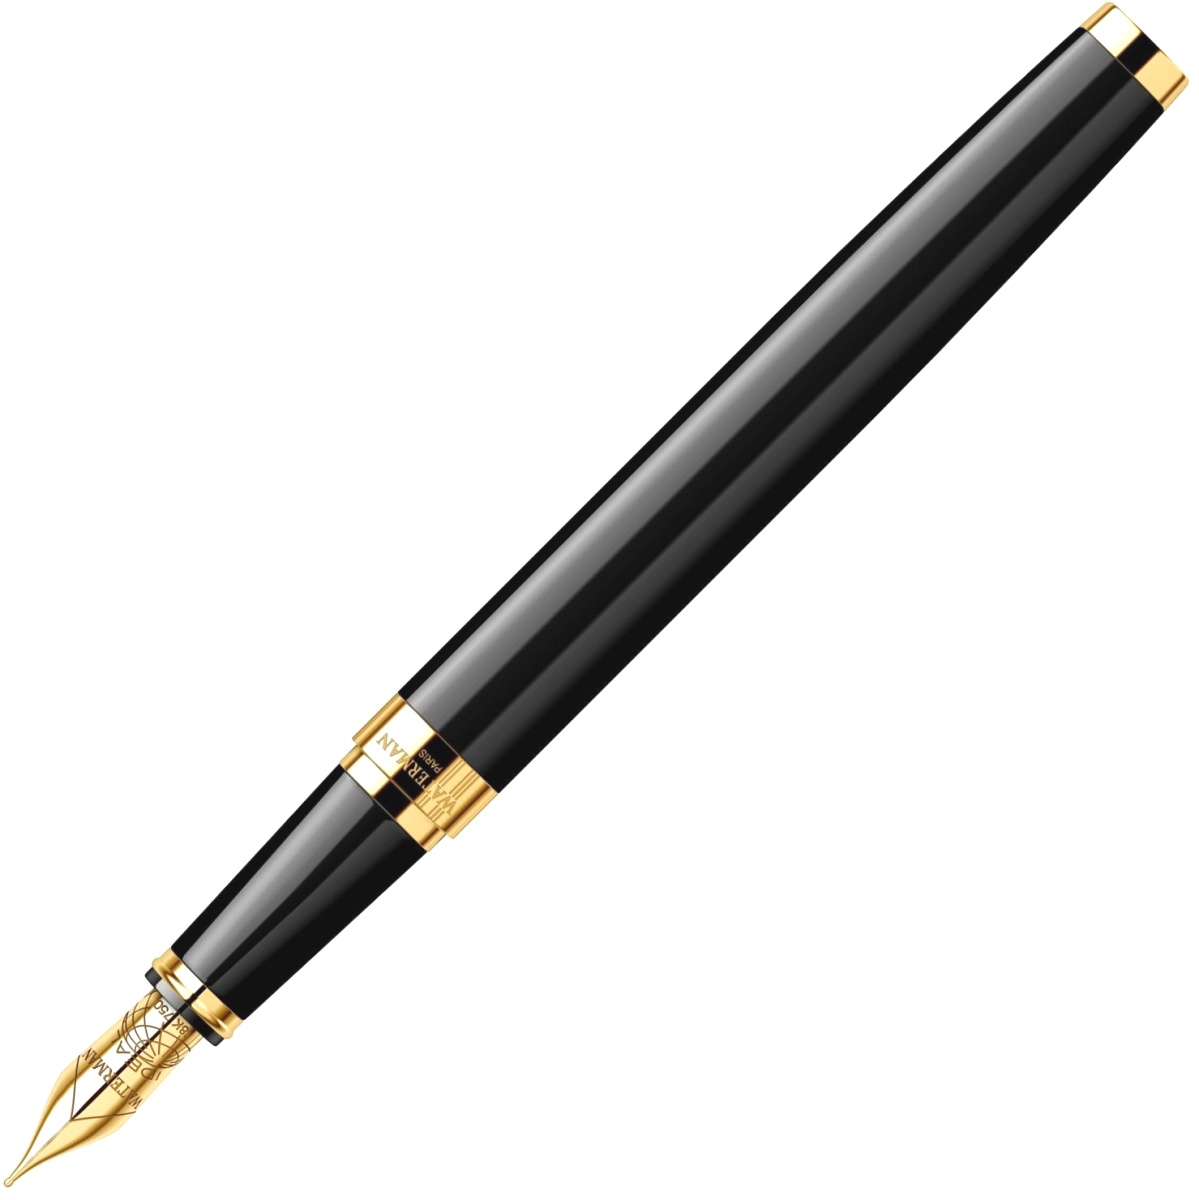  Перьевая ручка Waterman Exception Slim, Black Lacquer GT (Перо F), фото 2